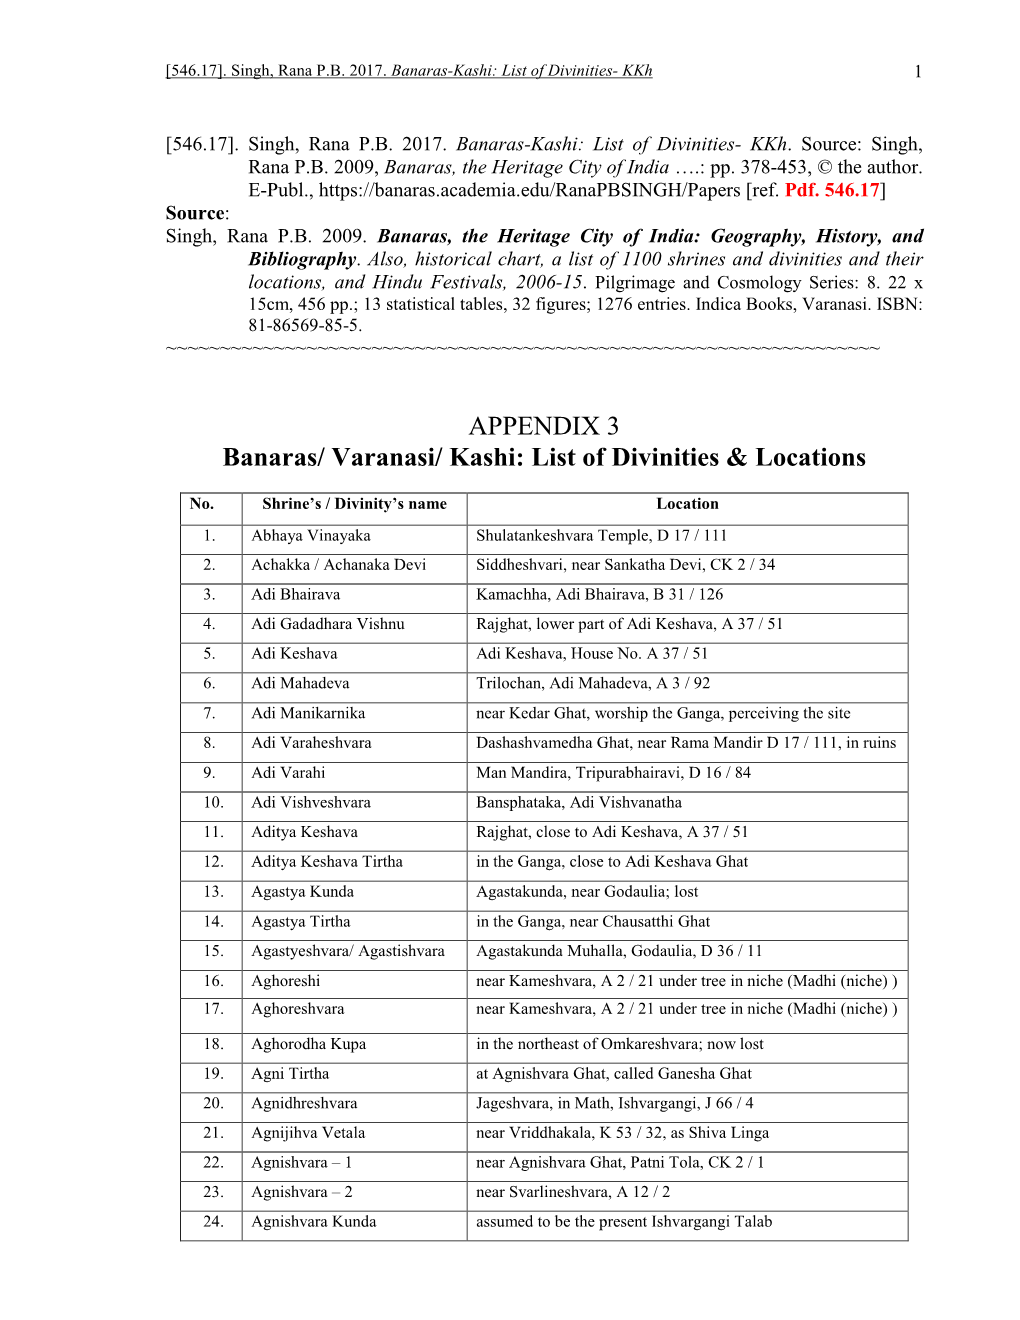 APPENDIX 3 Banaras/ Varanasi/ Kashi: List of Divinities & Locations